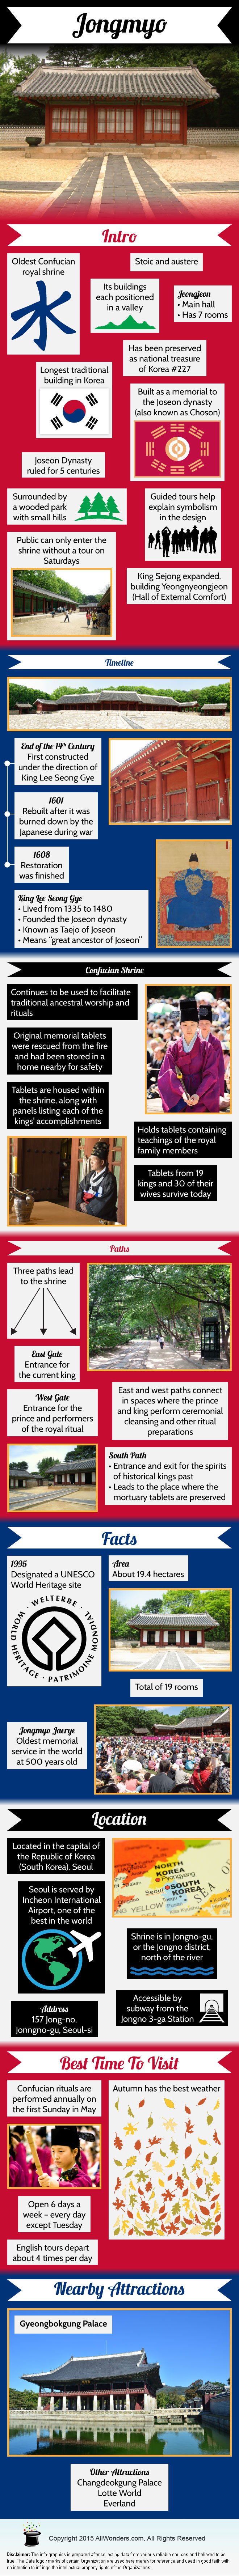 Jongmyo Shrine - Facts & Infographic